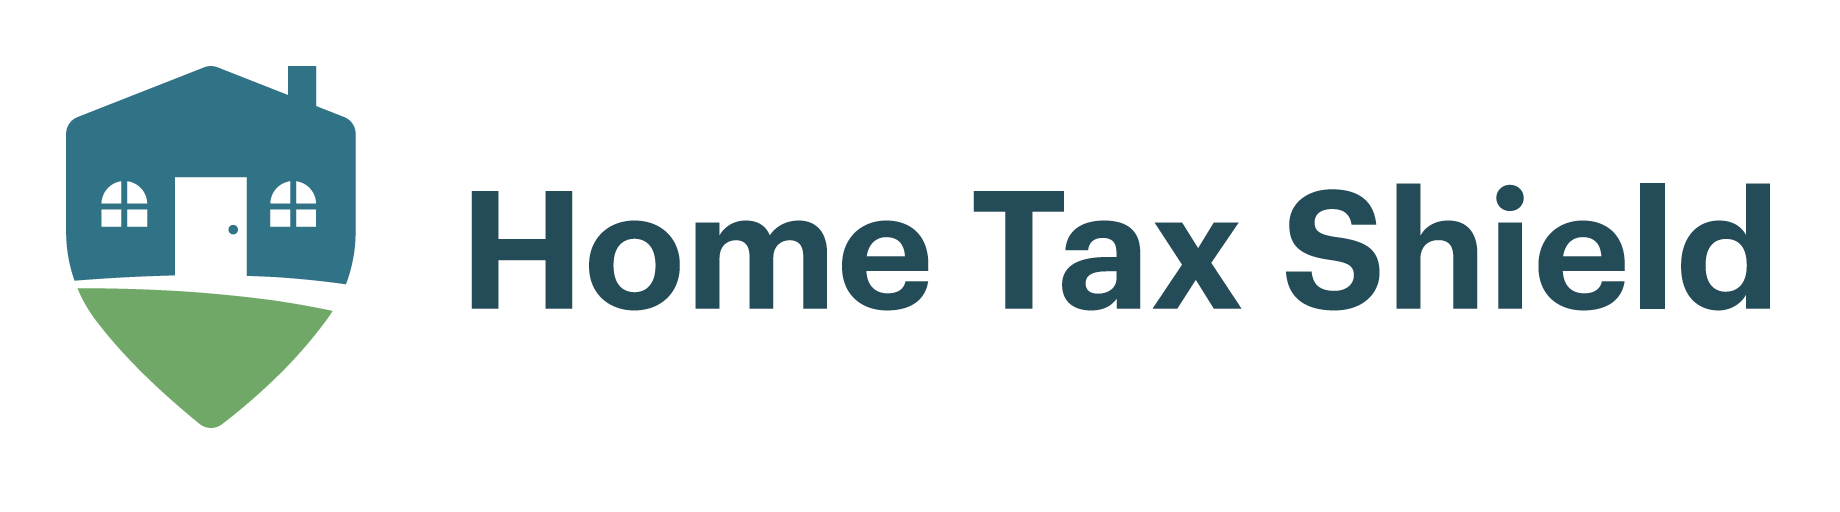 Home Tax Shield Logo .png